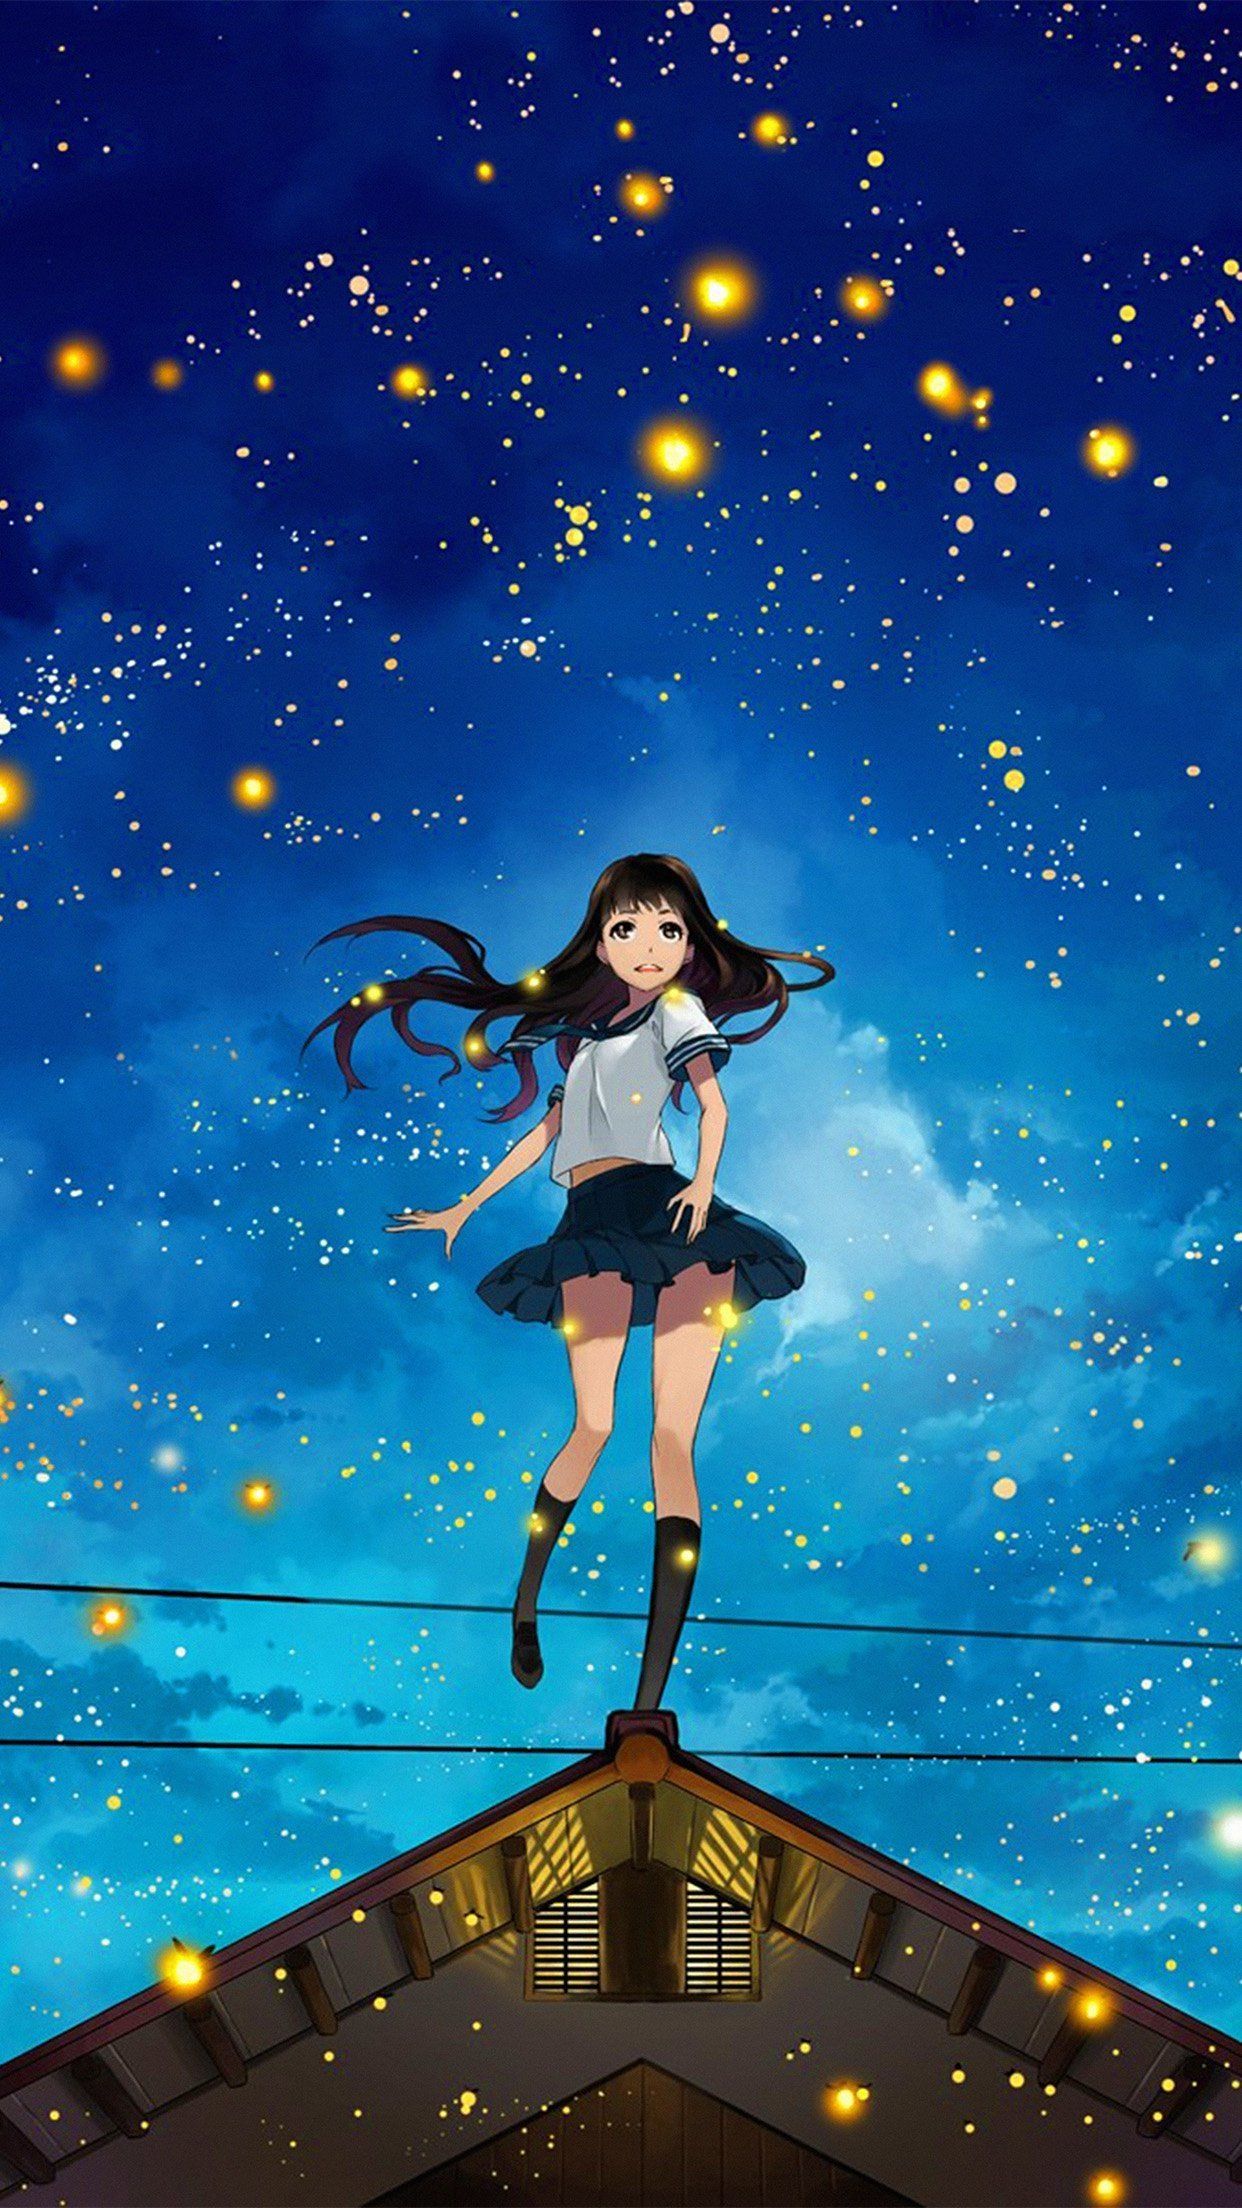 Aesthetic Anime Wallpaper For iPad